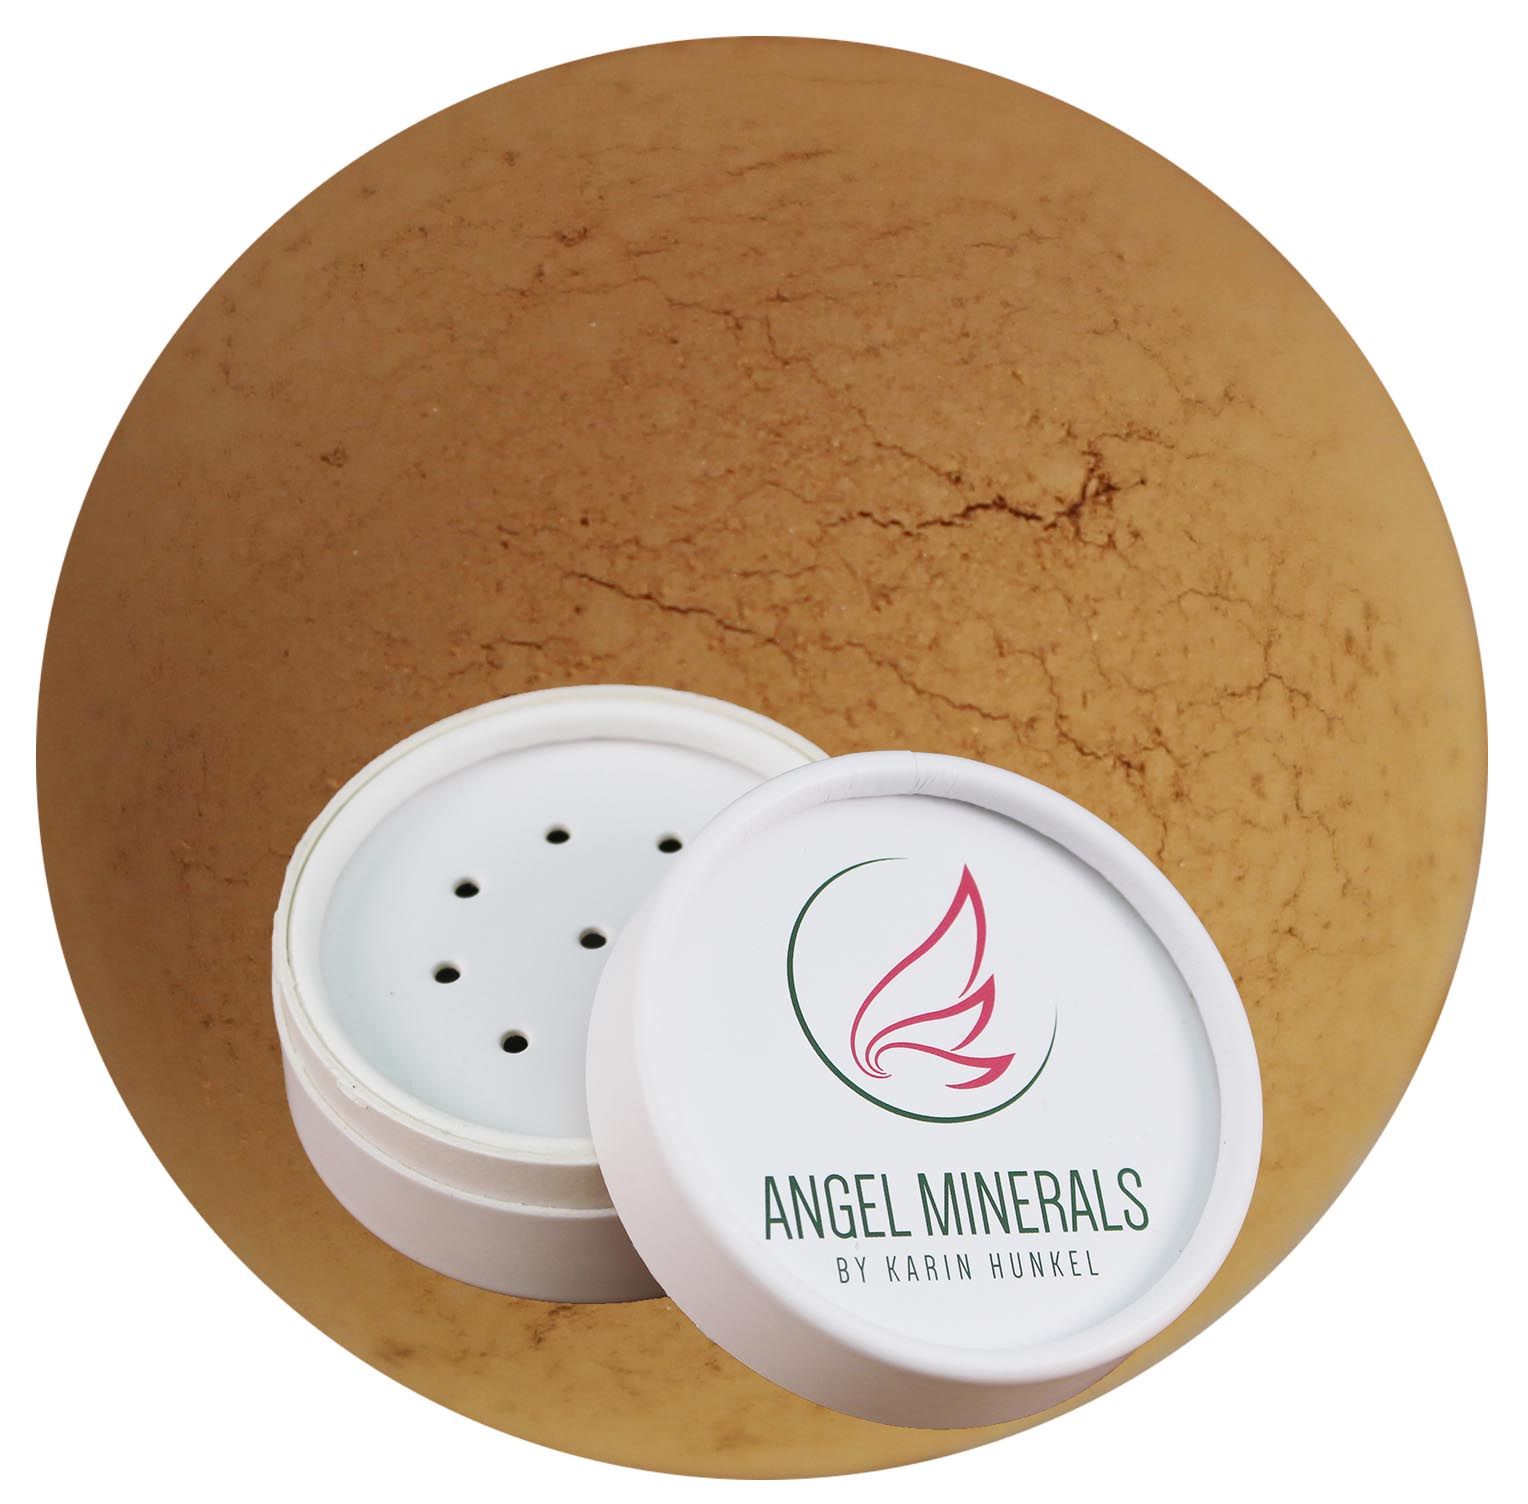 Angel Minerals Vegan Mineral Foundation - N5 Lovely Tan Papier - 5g